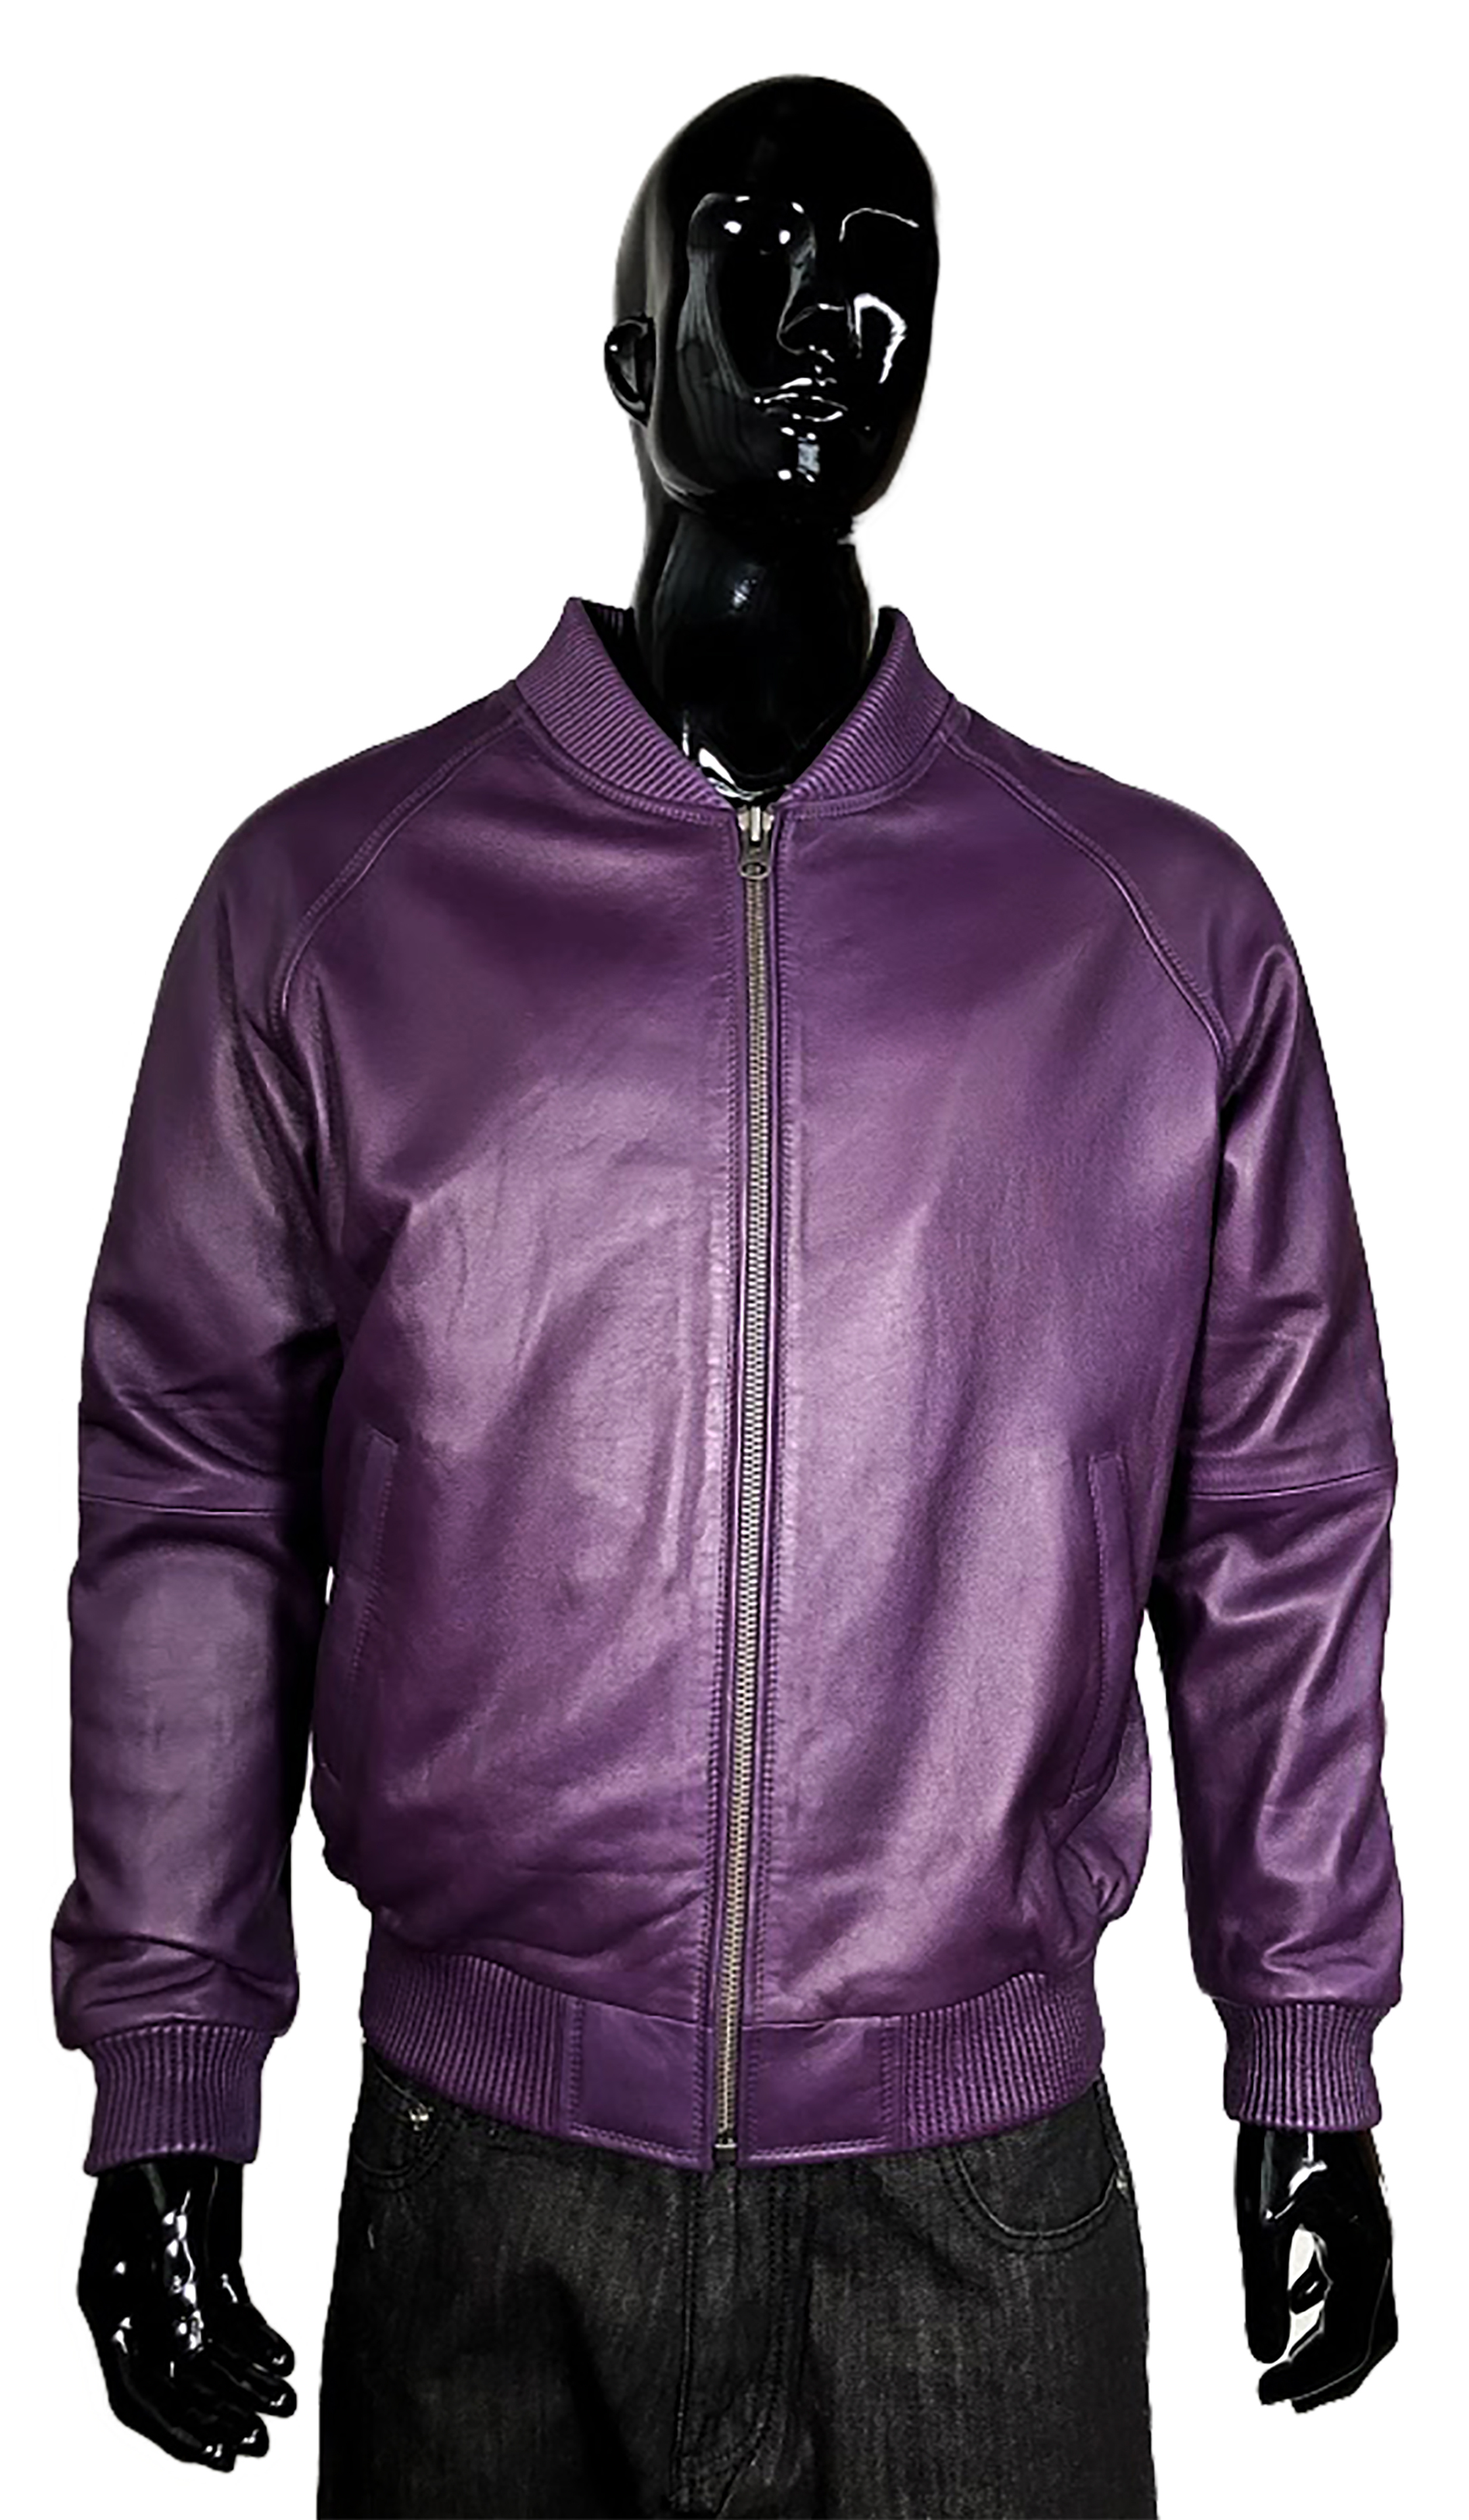 Inhalere Profit Ferie G-Gator Purple Genuine Lambskin Leather Baseball Varsity Bomber Jacket  1051. - $349.90 :: Upscale Menswear - UpscaleMenswear.com